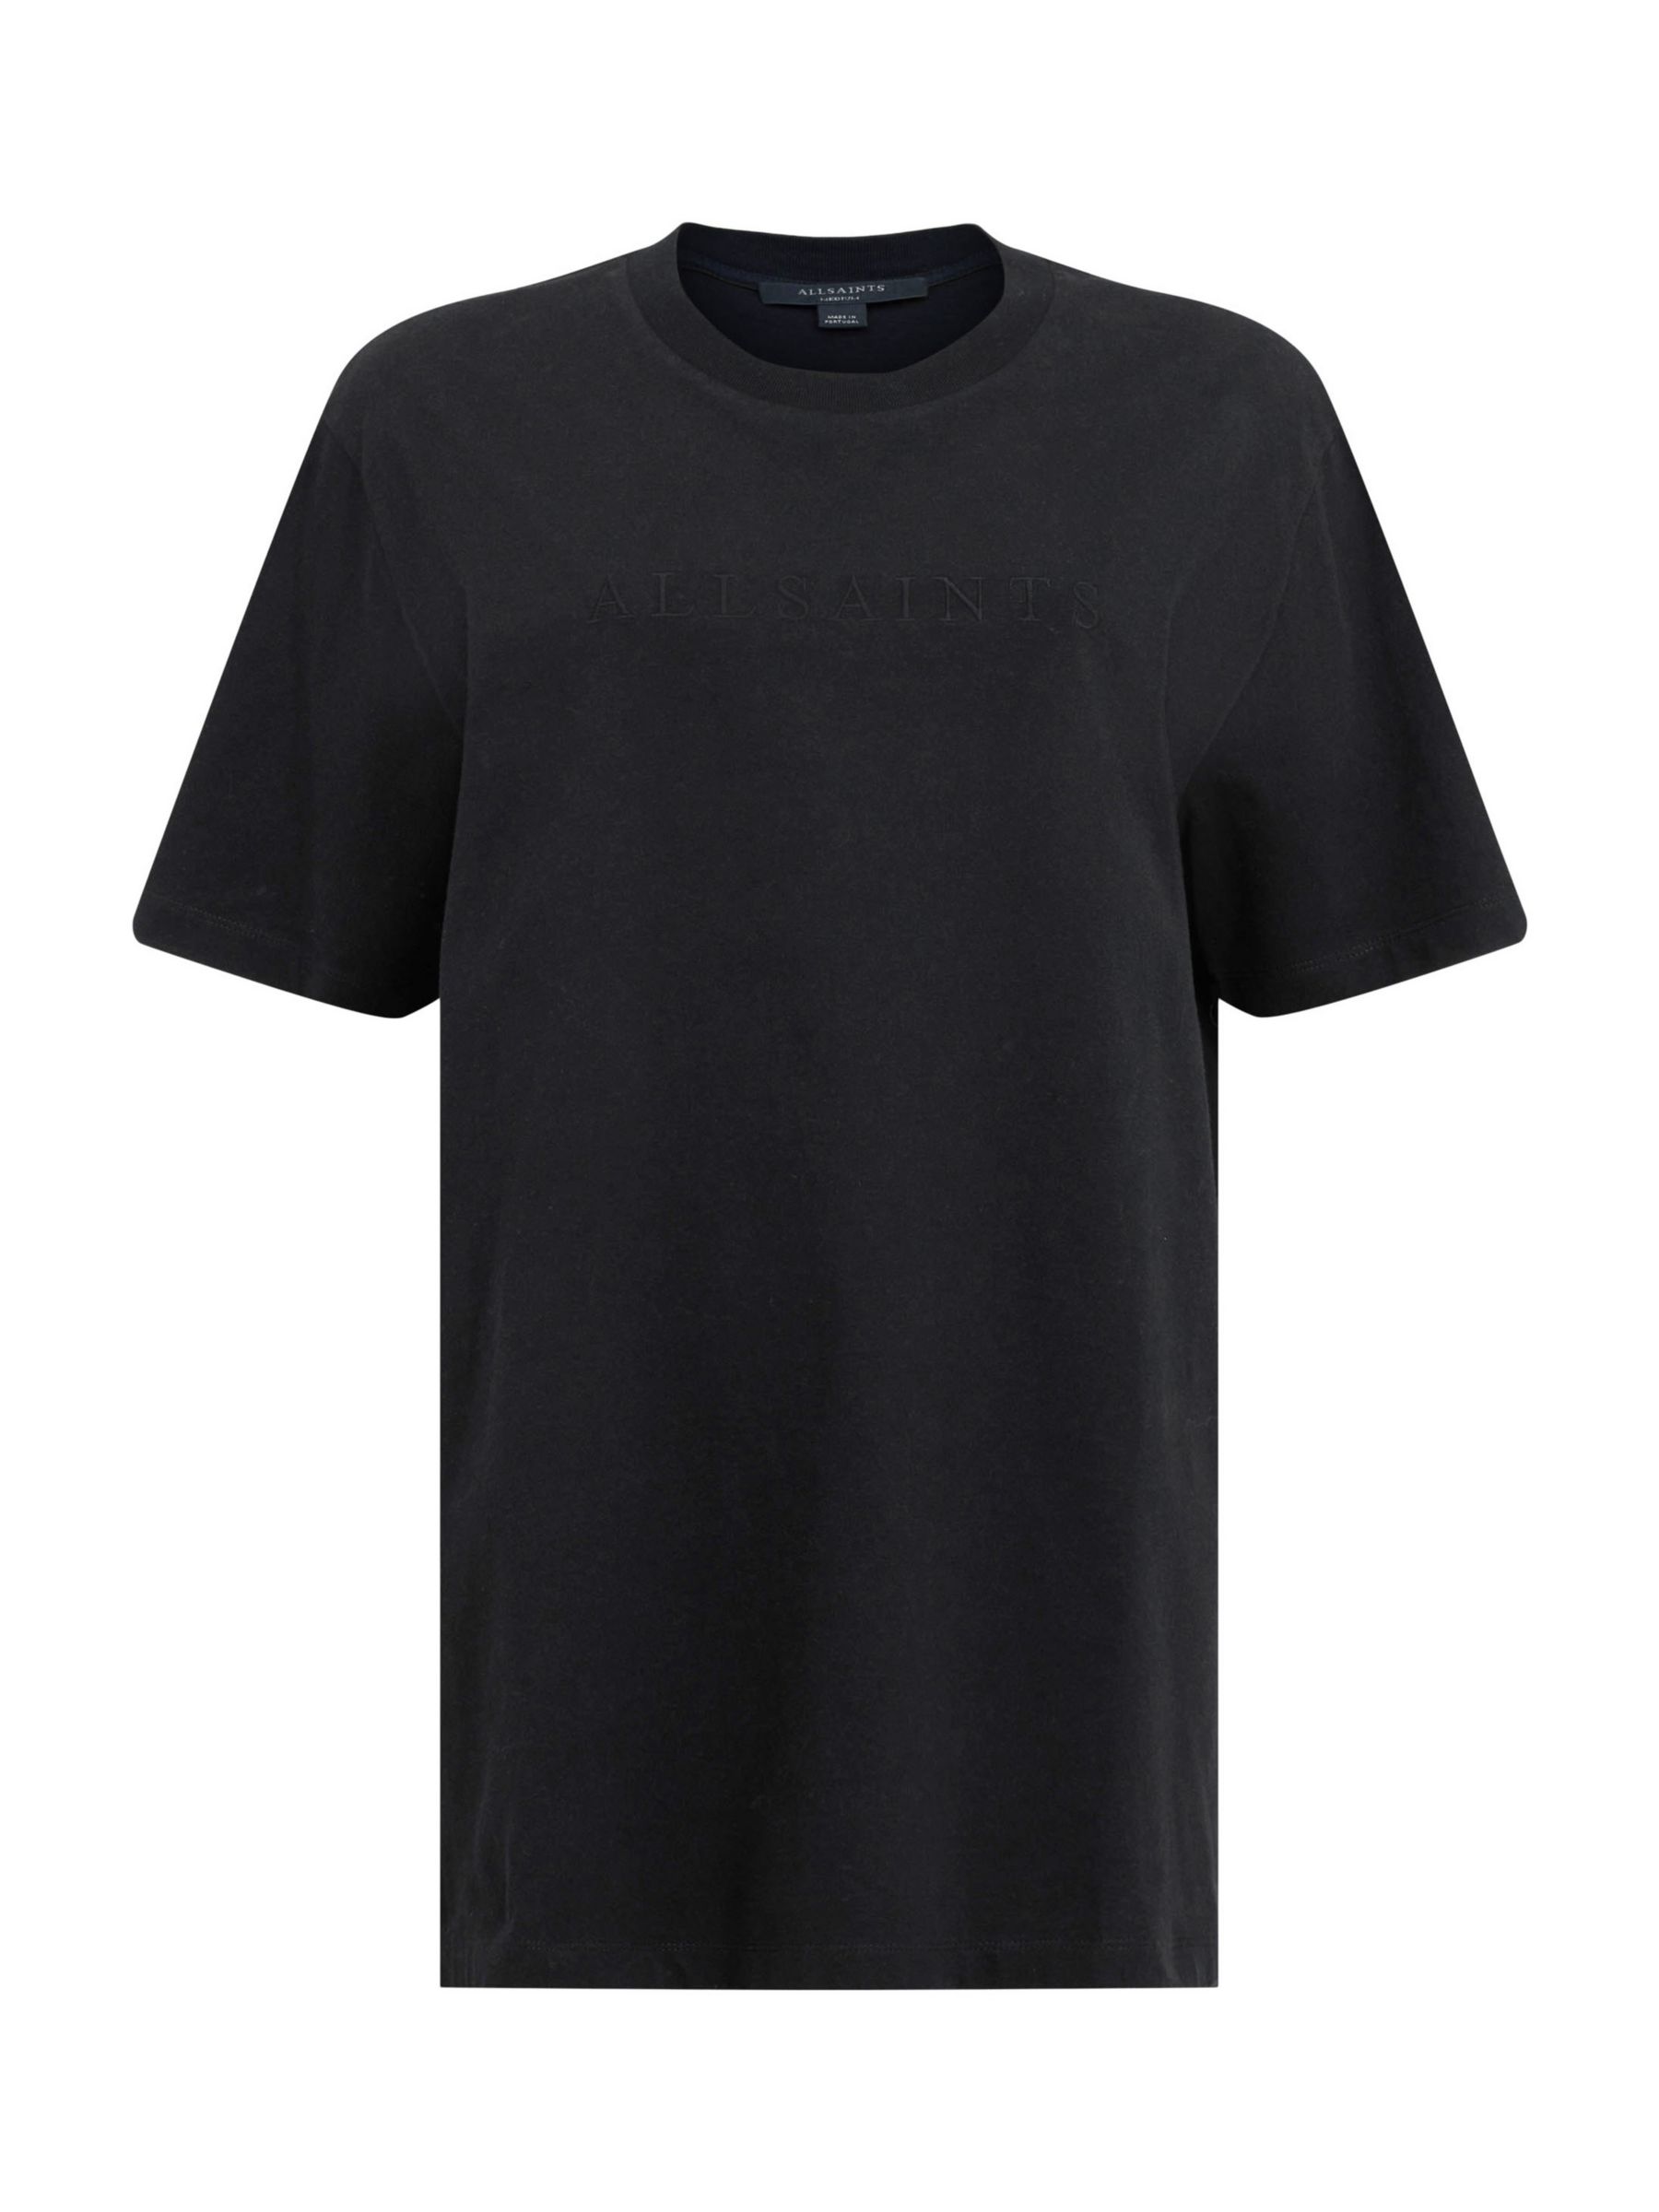 AllSaints Pippa Boyfriend Fit T-Shirt, Black at John Lewis & Partners